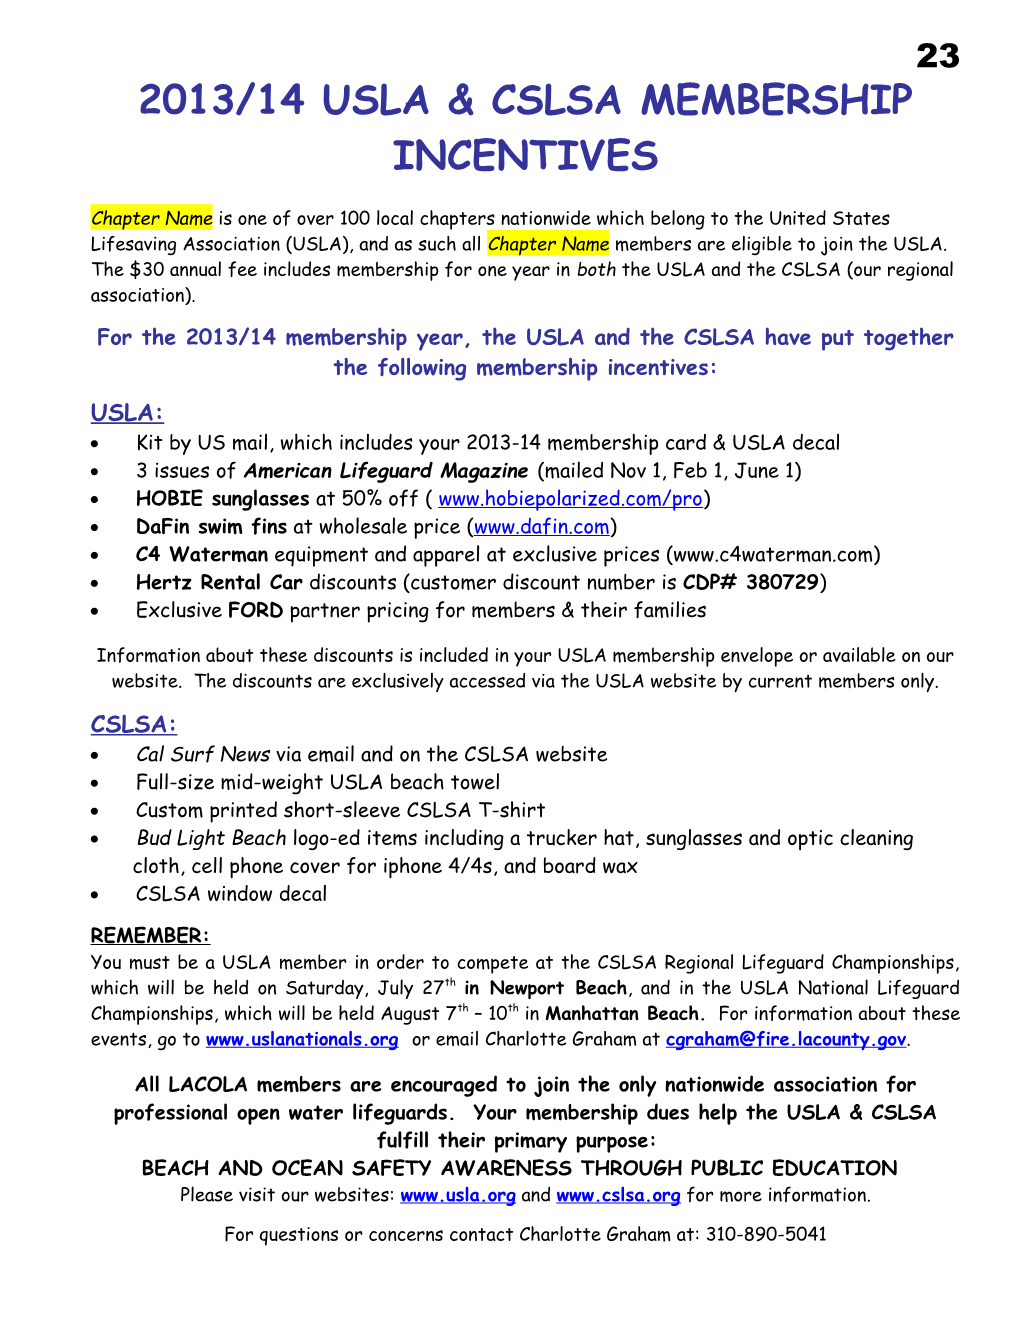 2006/07 Usla & Cslsa Membership Incentives